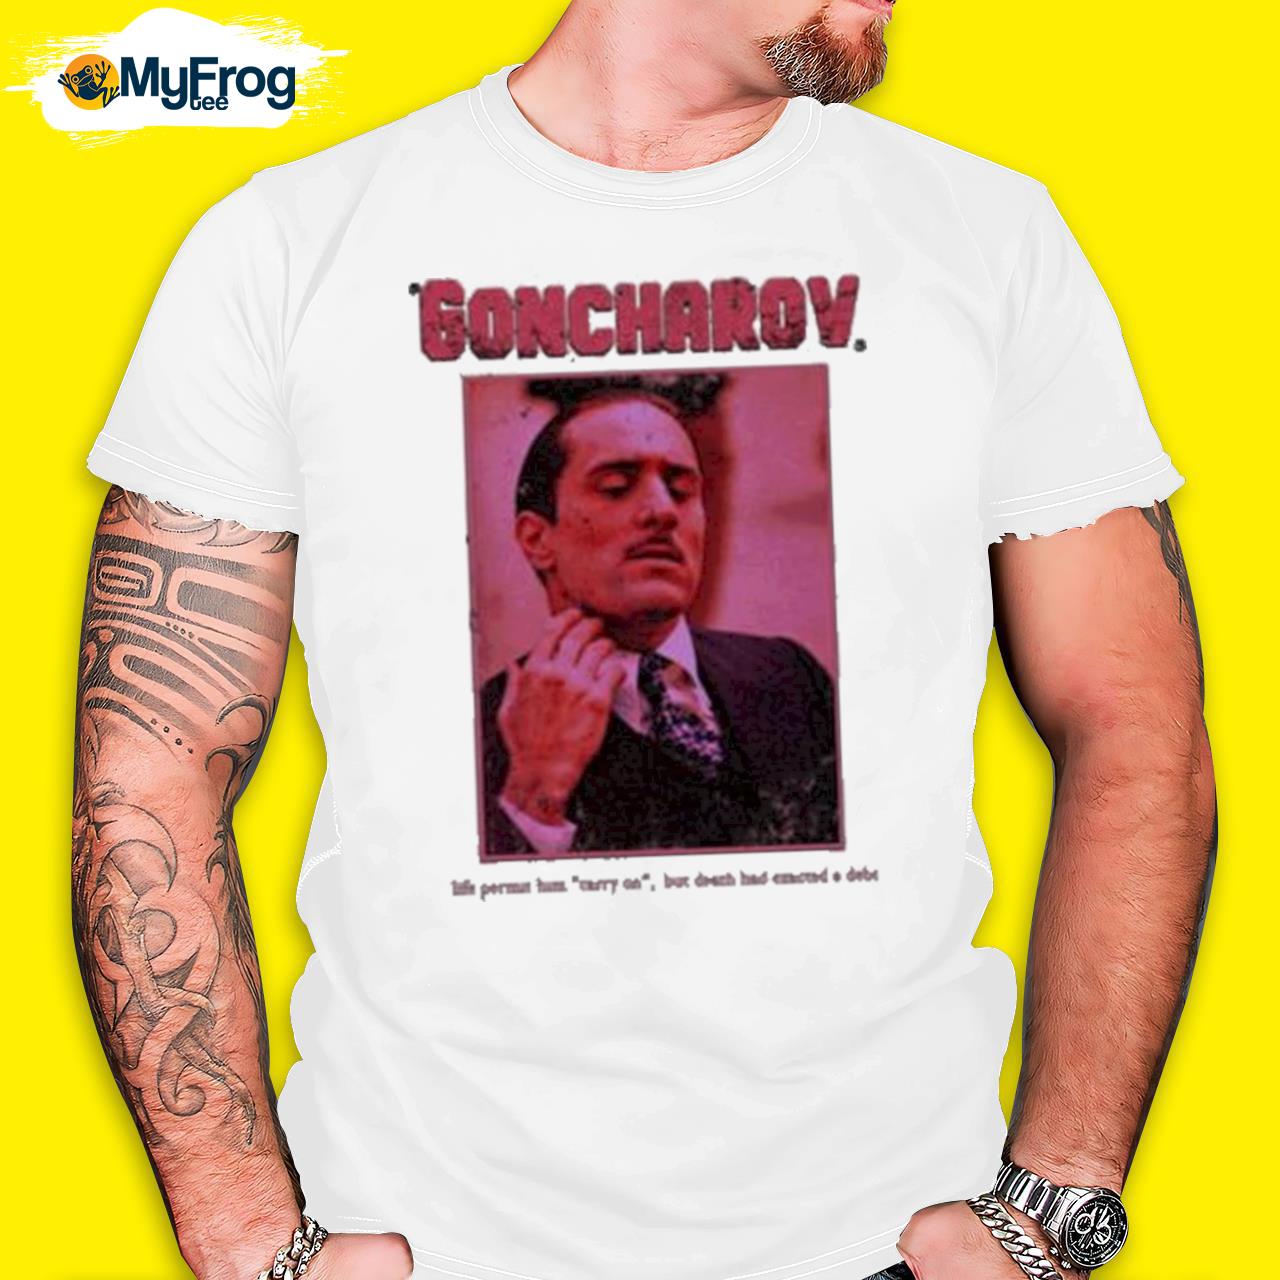 The story of goncharov life permit him carry on goncharov shirt